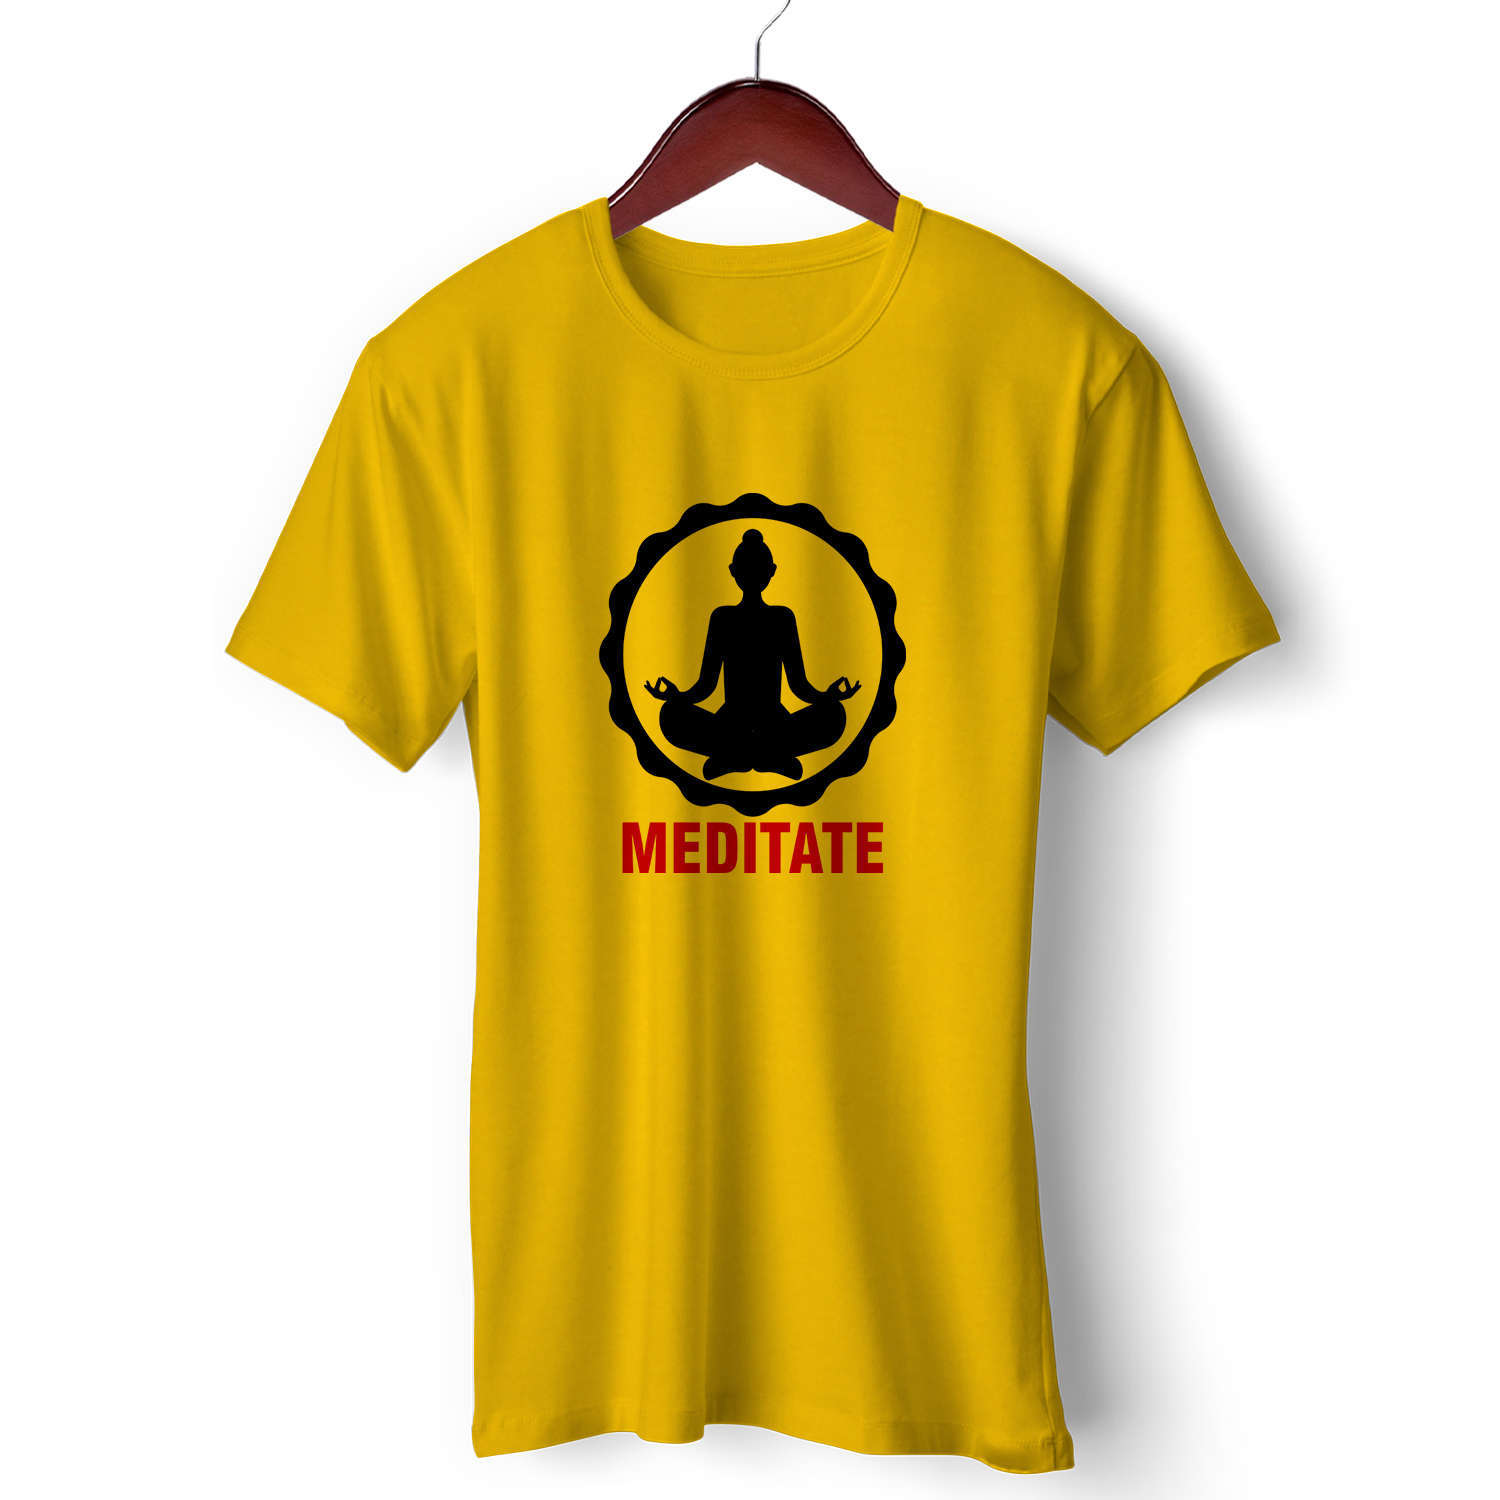 Printed cotton T-Shirt | Meditate | Round Neck Half Sleeve |Regular Fit